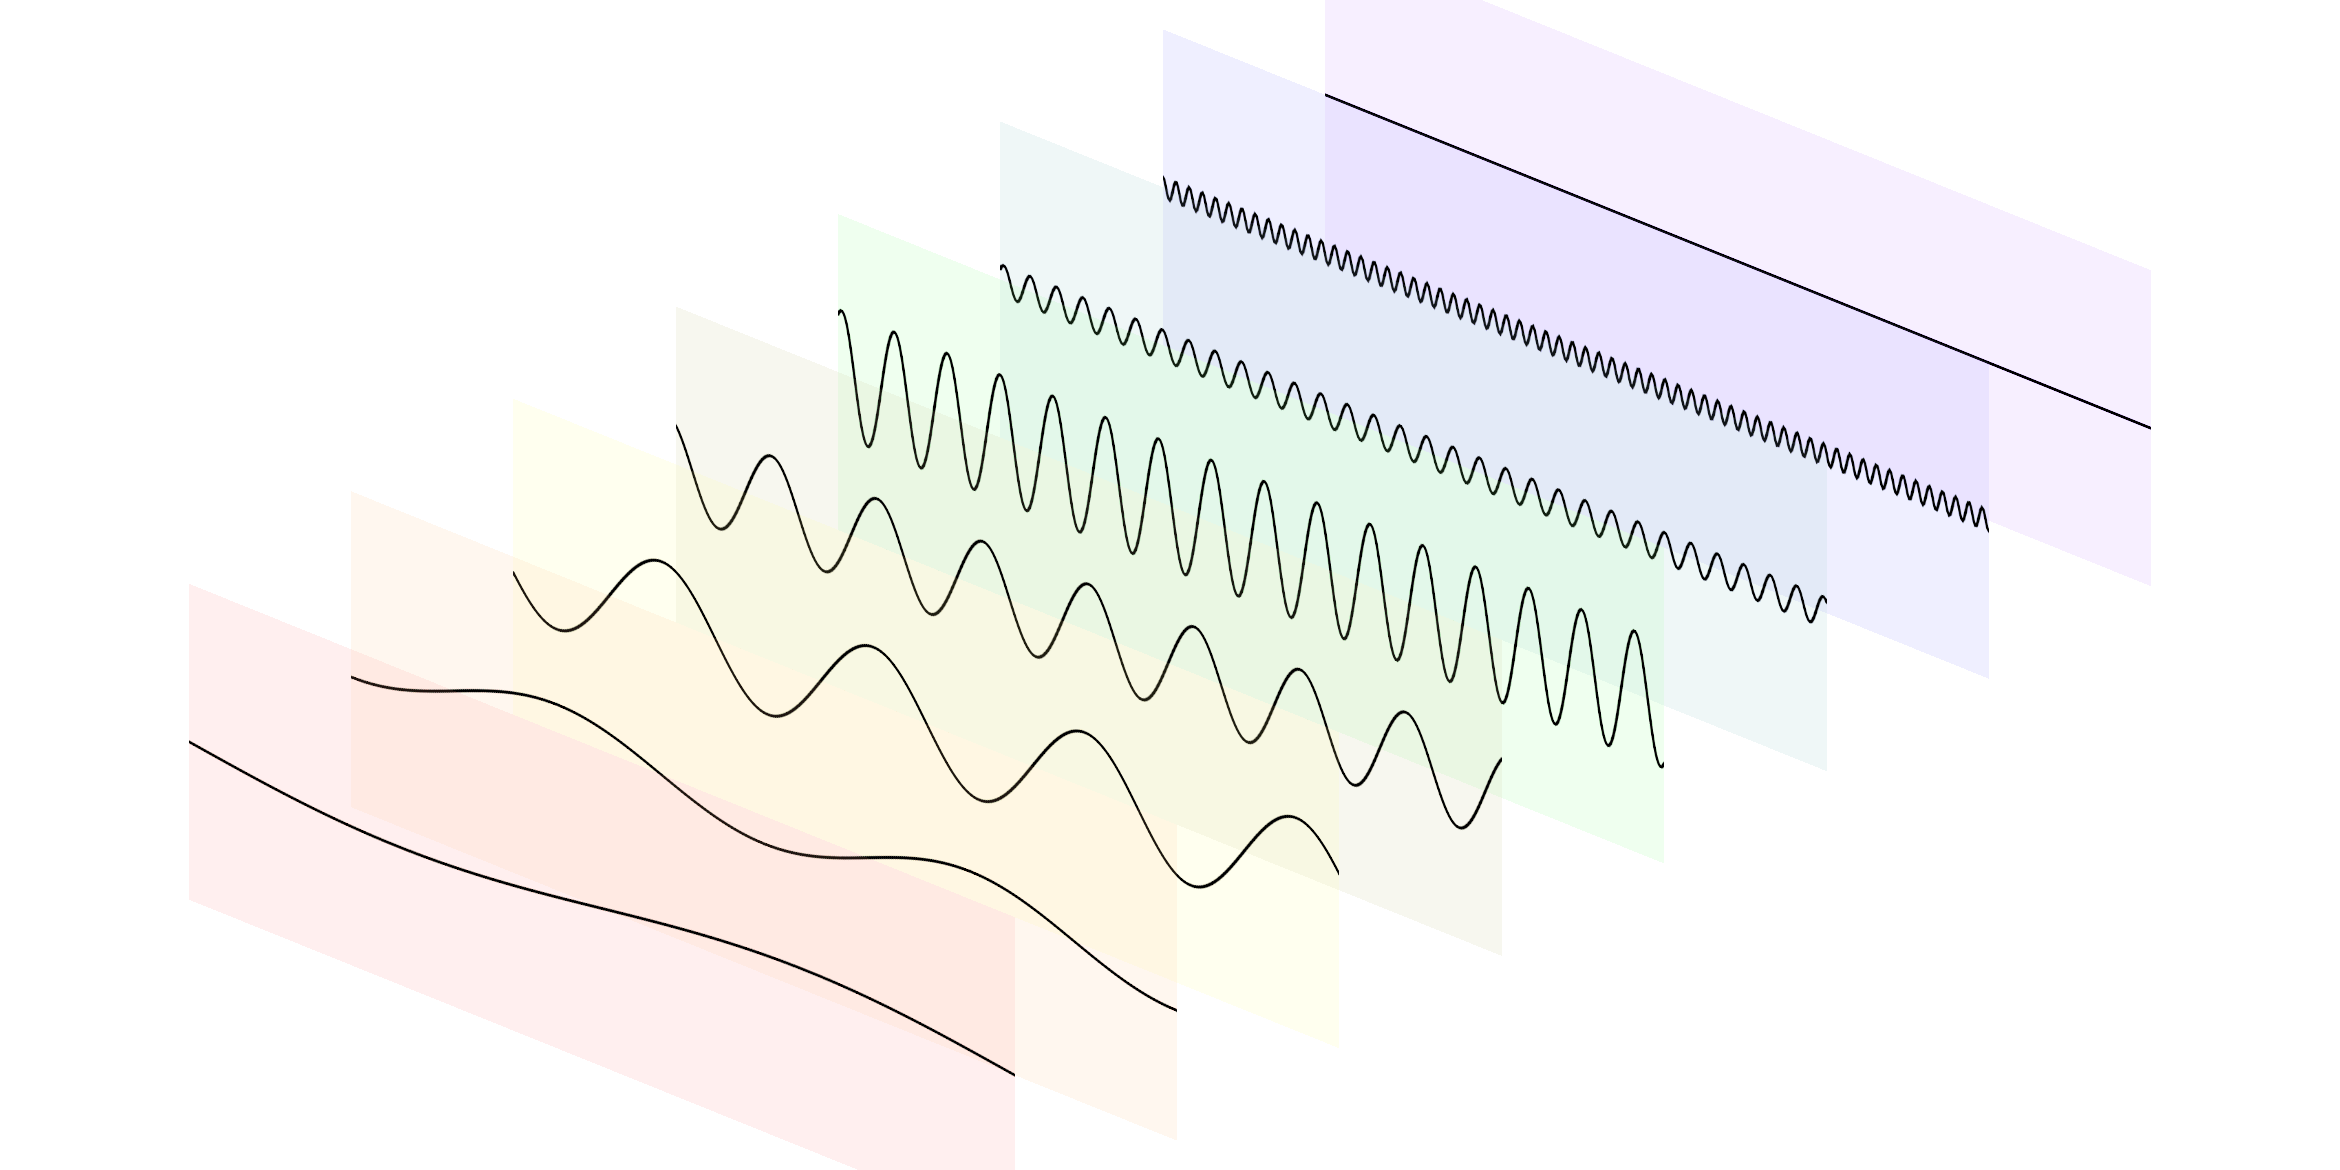 Spectrum Analysis of Sound